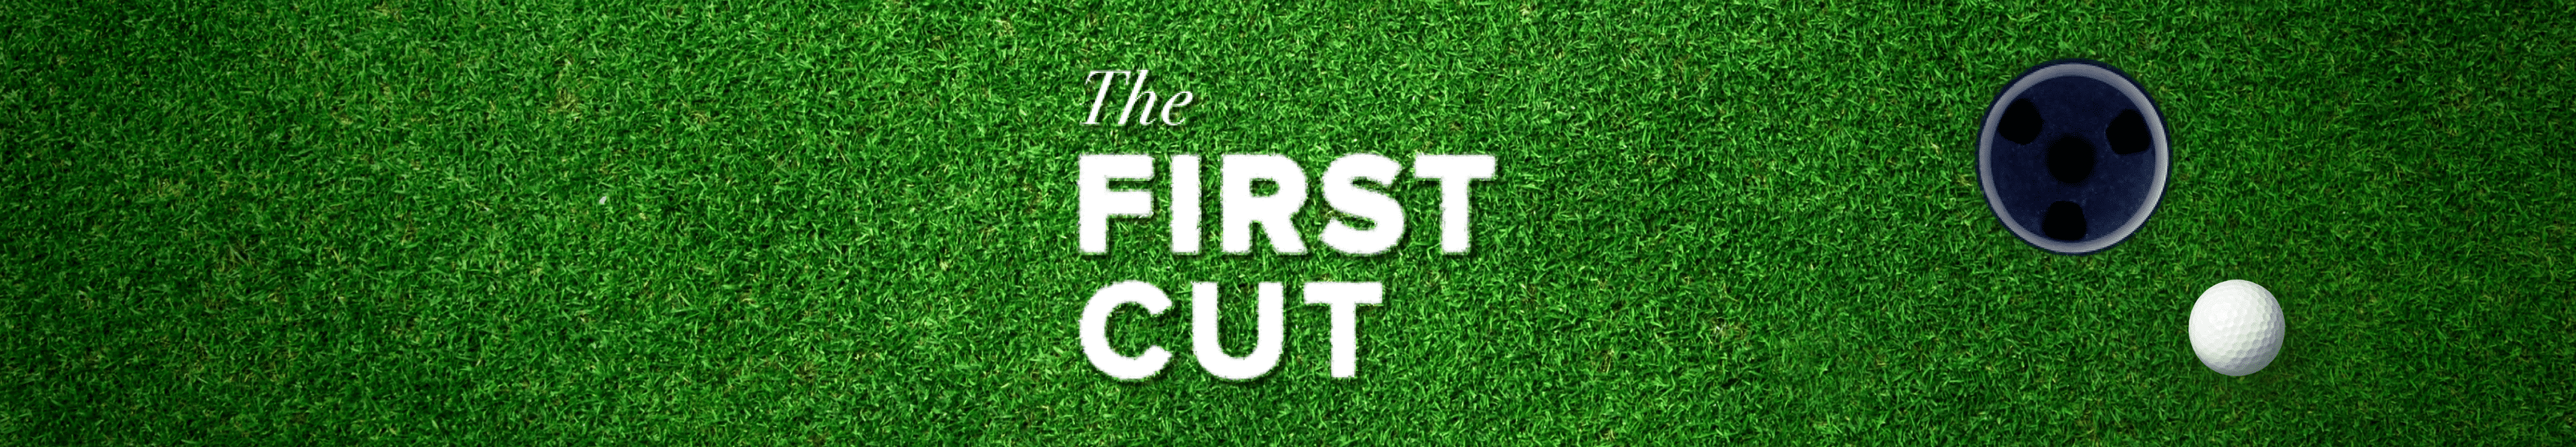 The First Cut Golf